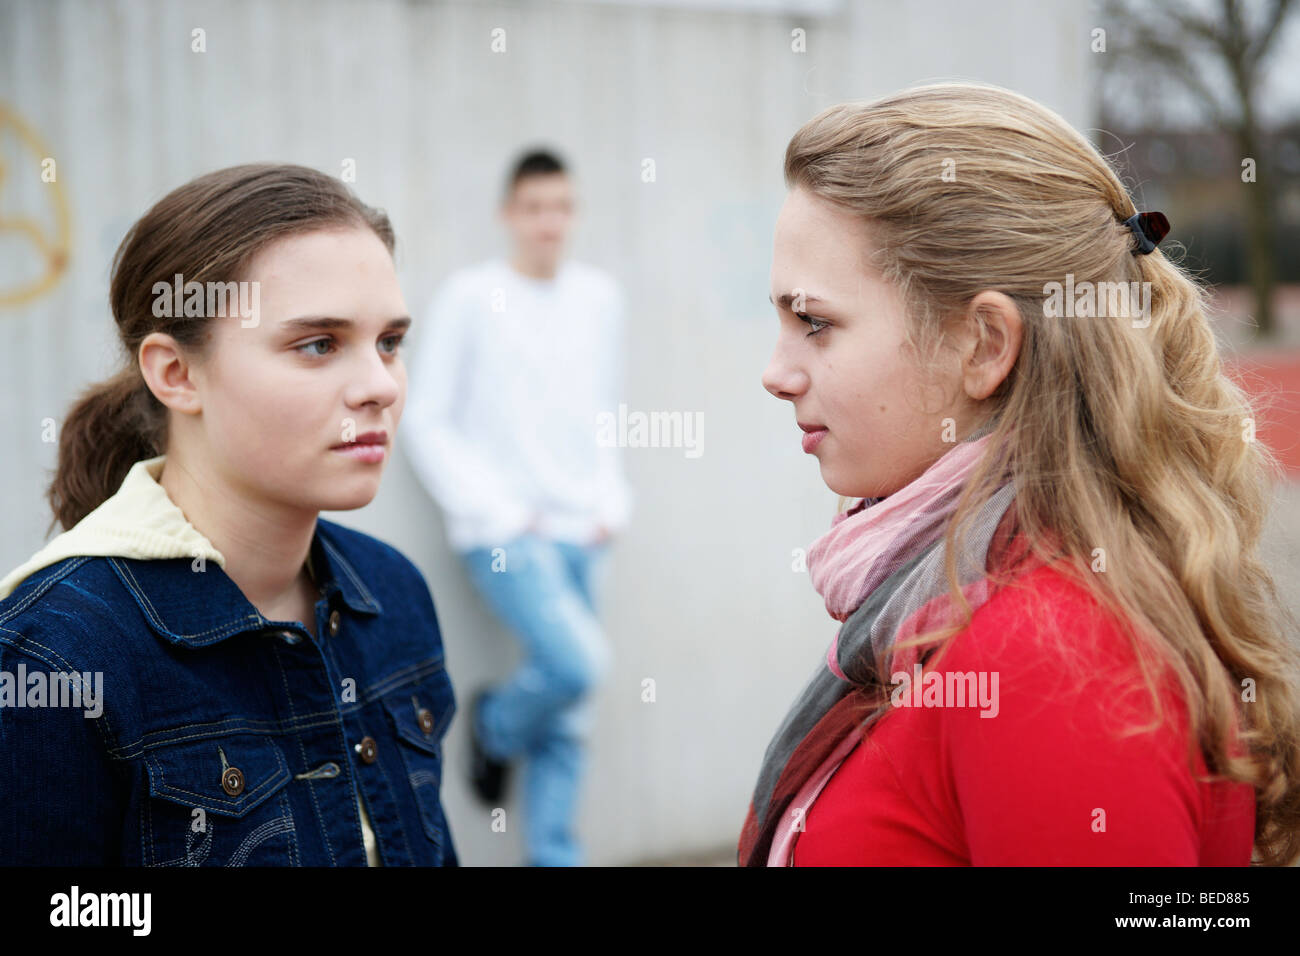 Rivalry between two teenage girls Stock Photo